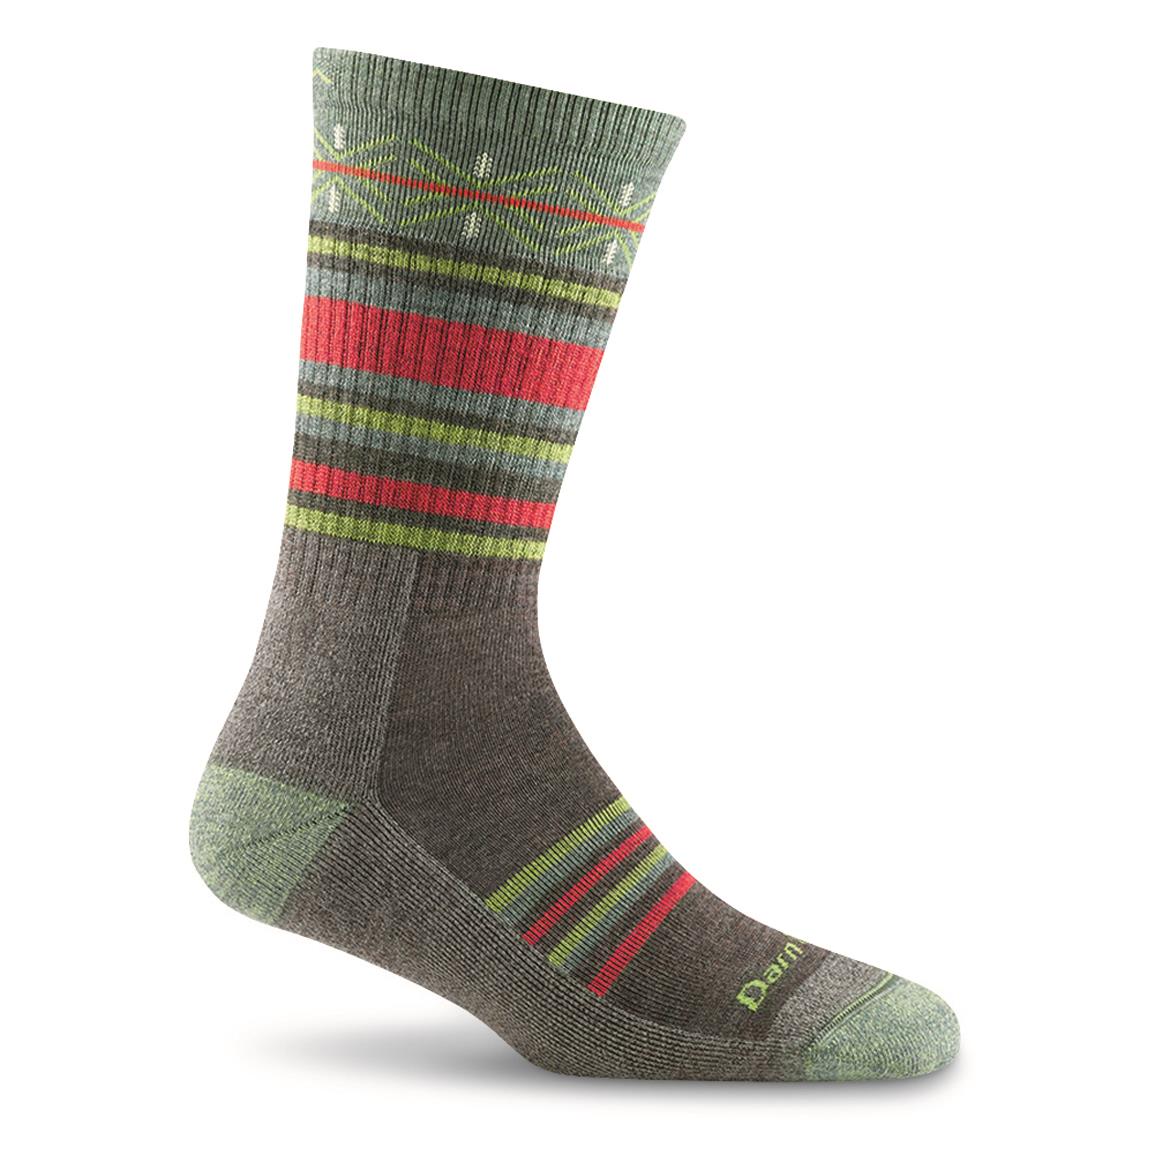 Realtree Women's Merino Wool Blend Boot Socks, 2 Pairs - 717881, Socks ...